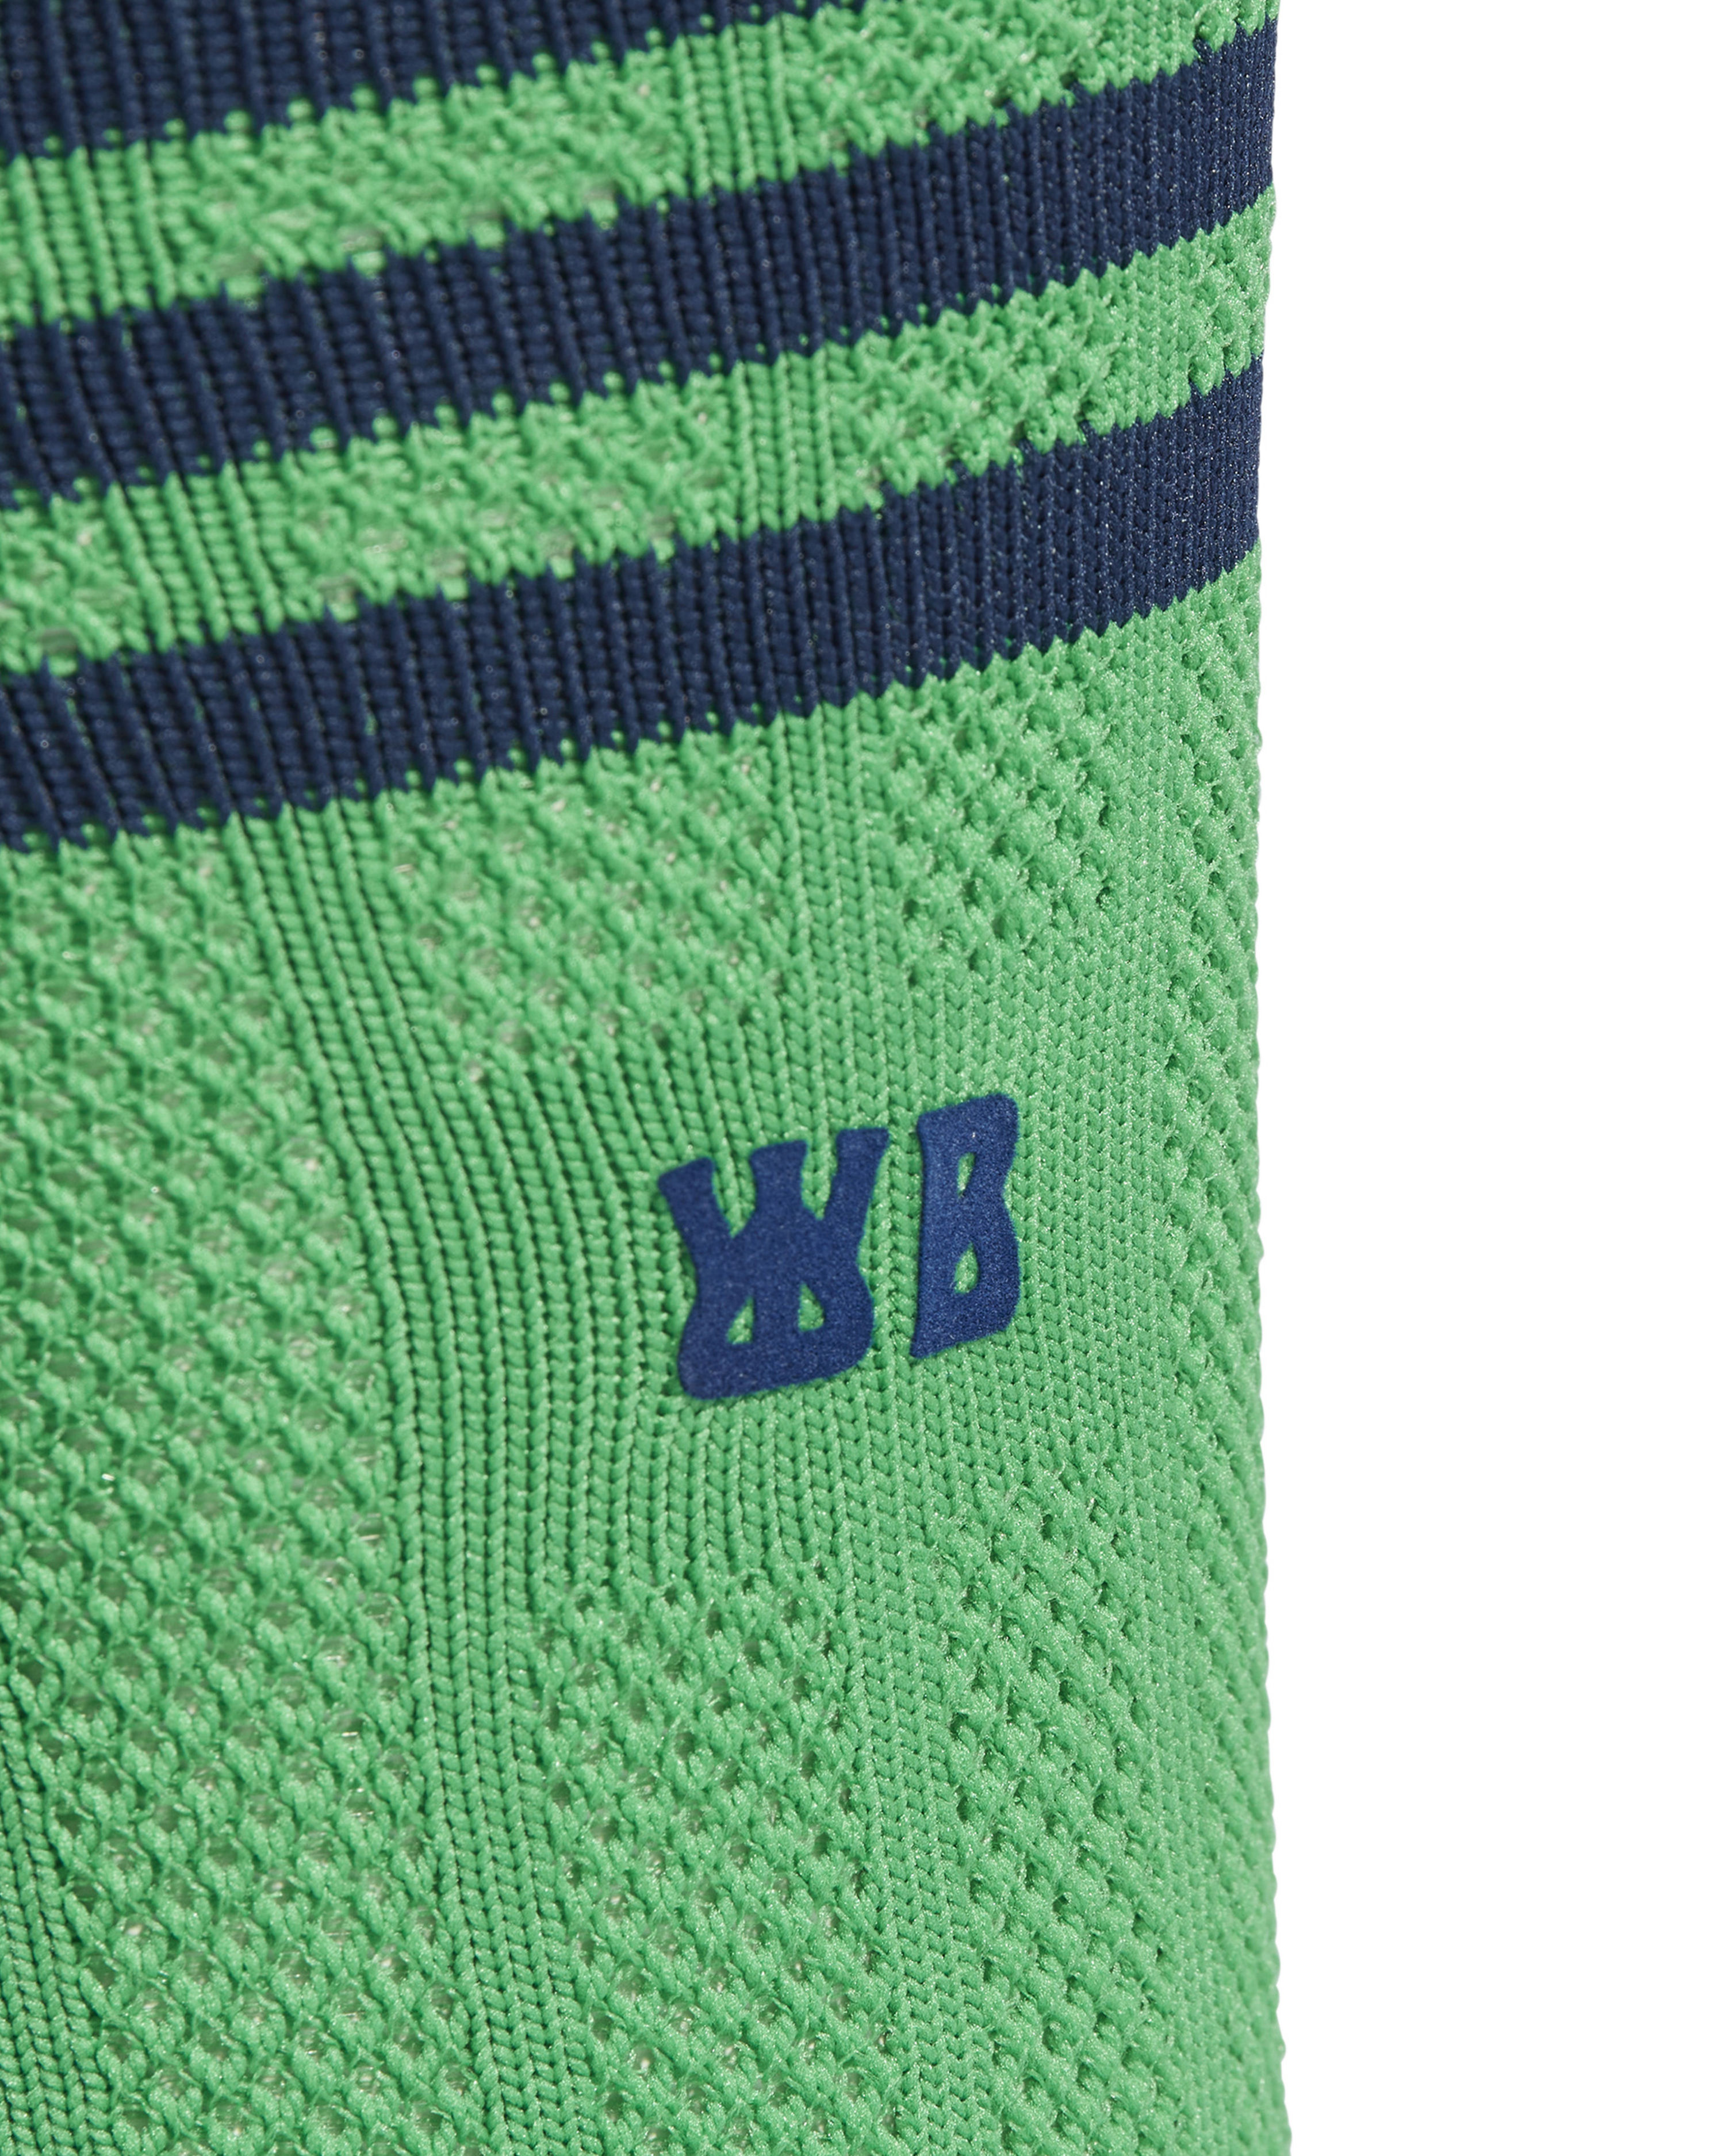 Wales Bonner Socks - Green / Navy Blue